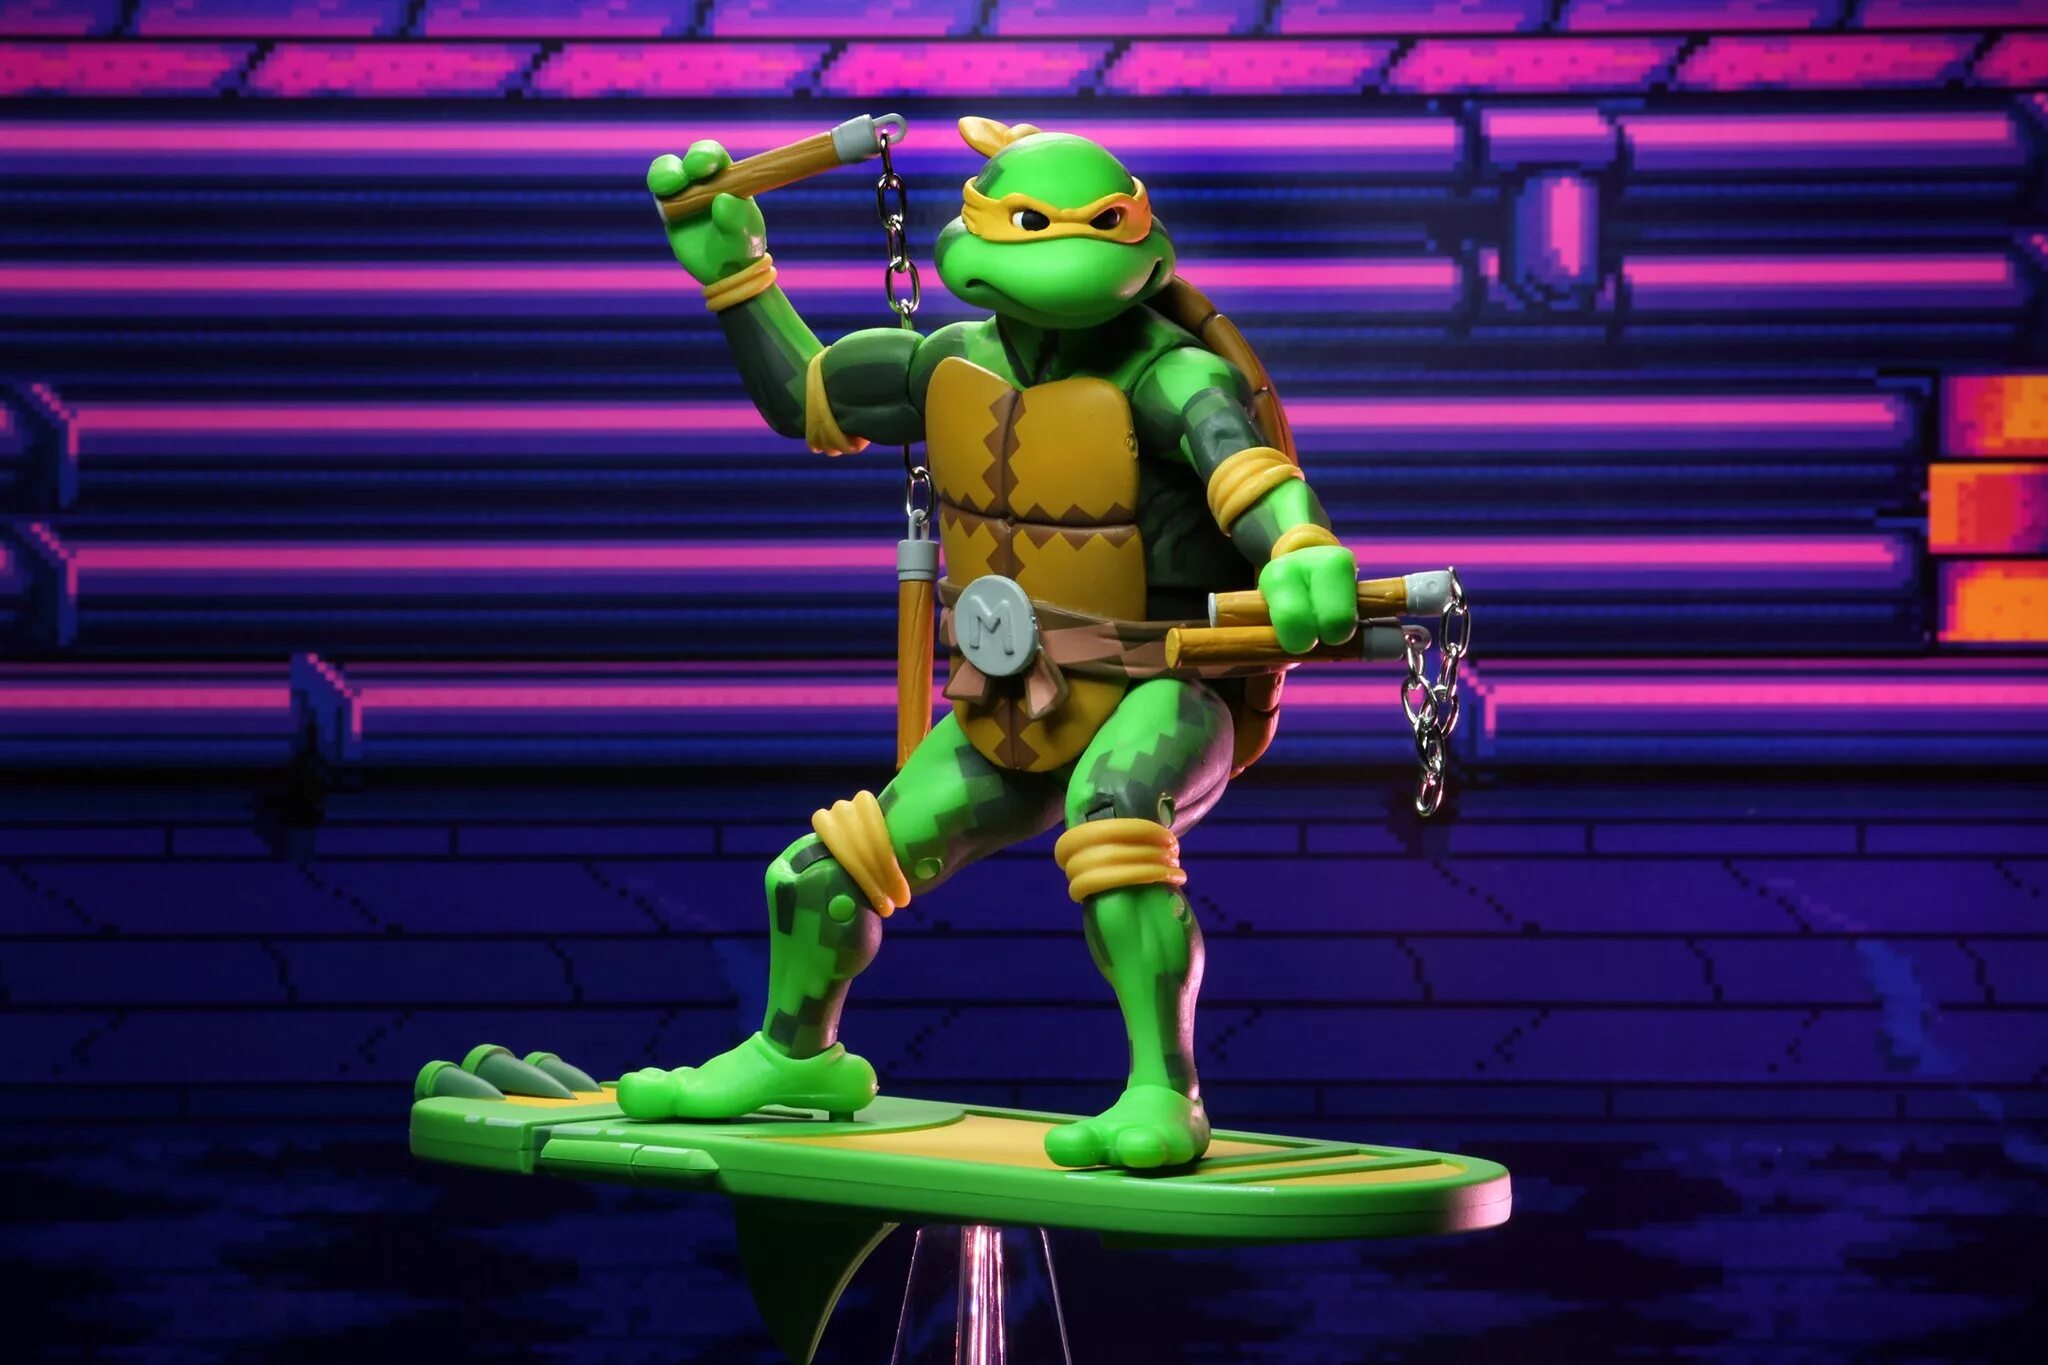 Teenage Mutant Ninja Turtles Turtles in time. Микеланджело Черепашки-ниндзя. Teenage Mutant Ninja Turtles 4 Turtles in time. Черепашки ниндзя легенды Микеланджело.